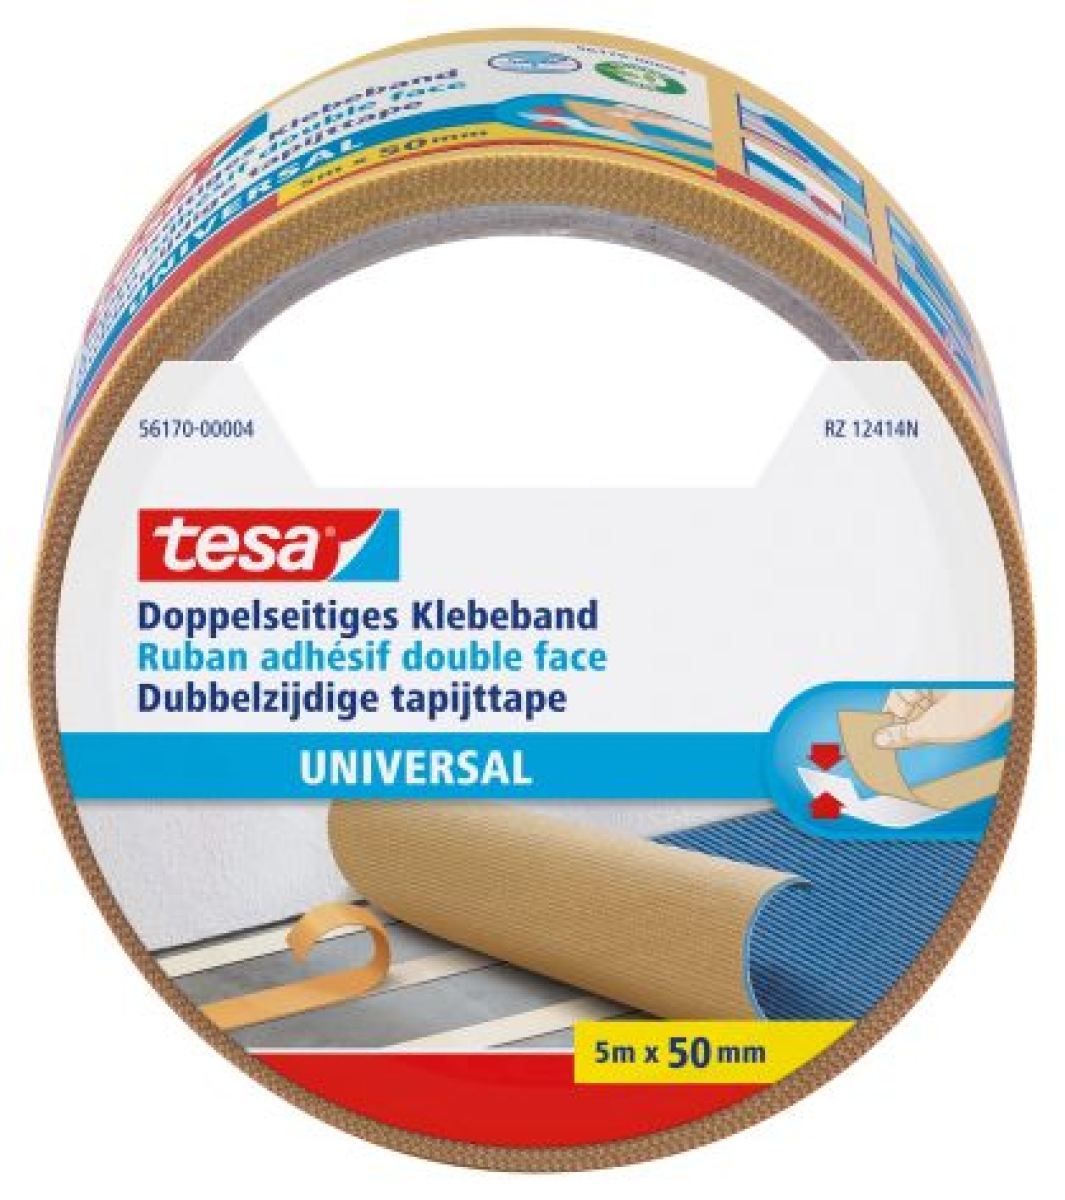 TesaAdhesive tape double-sided 5m 50mm Tesa 561700000411Article-No: 4042448388650